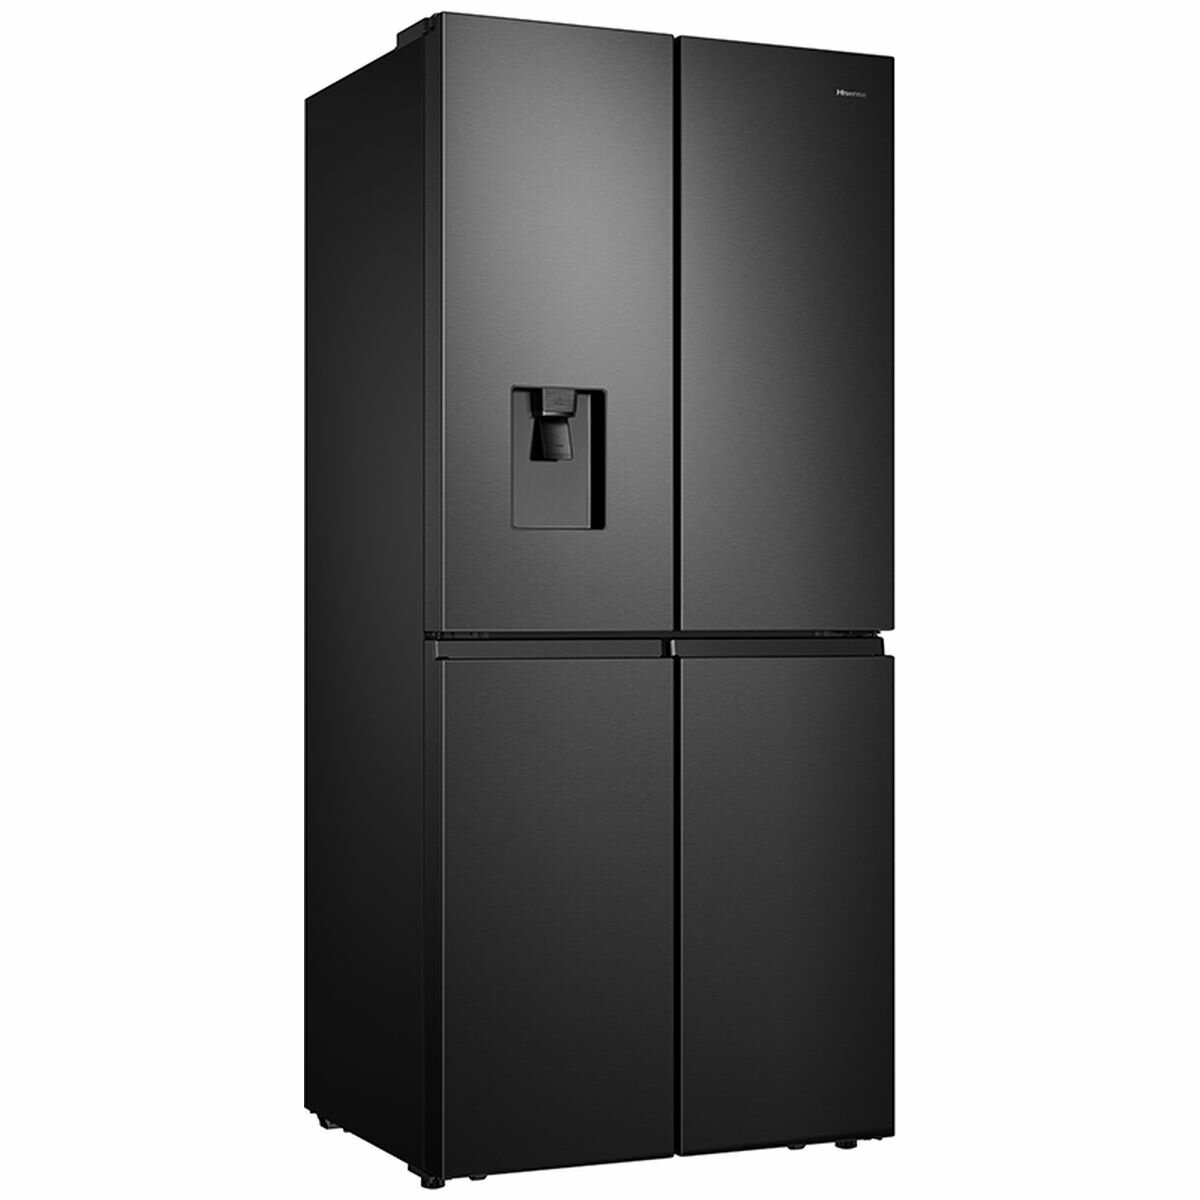 Hisense REF454DR 454L French Door Refrigerator